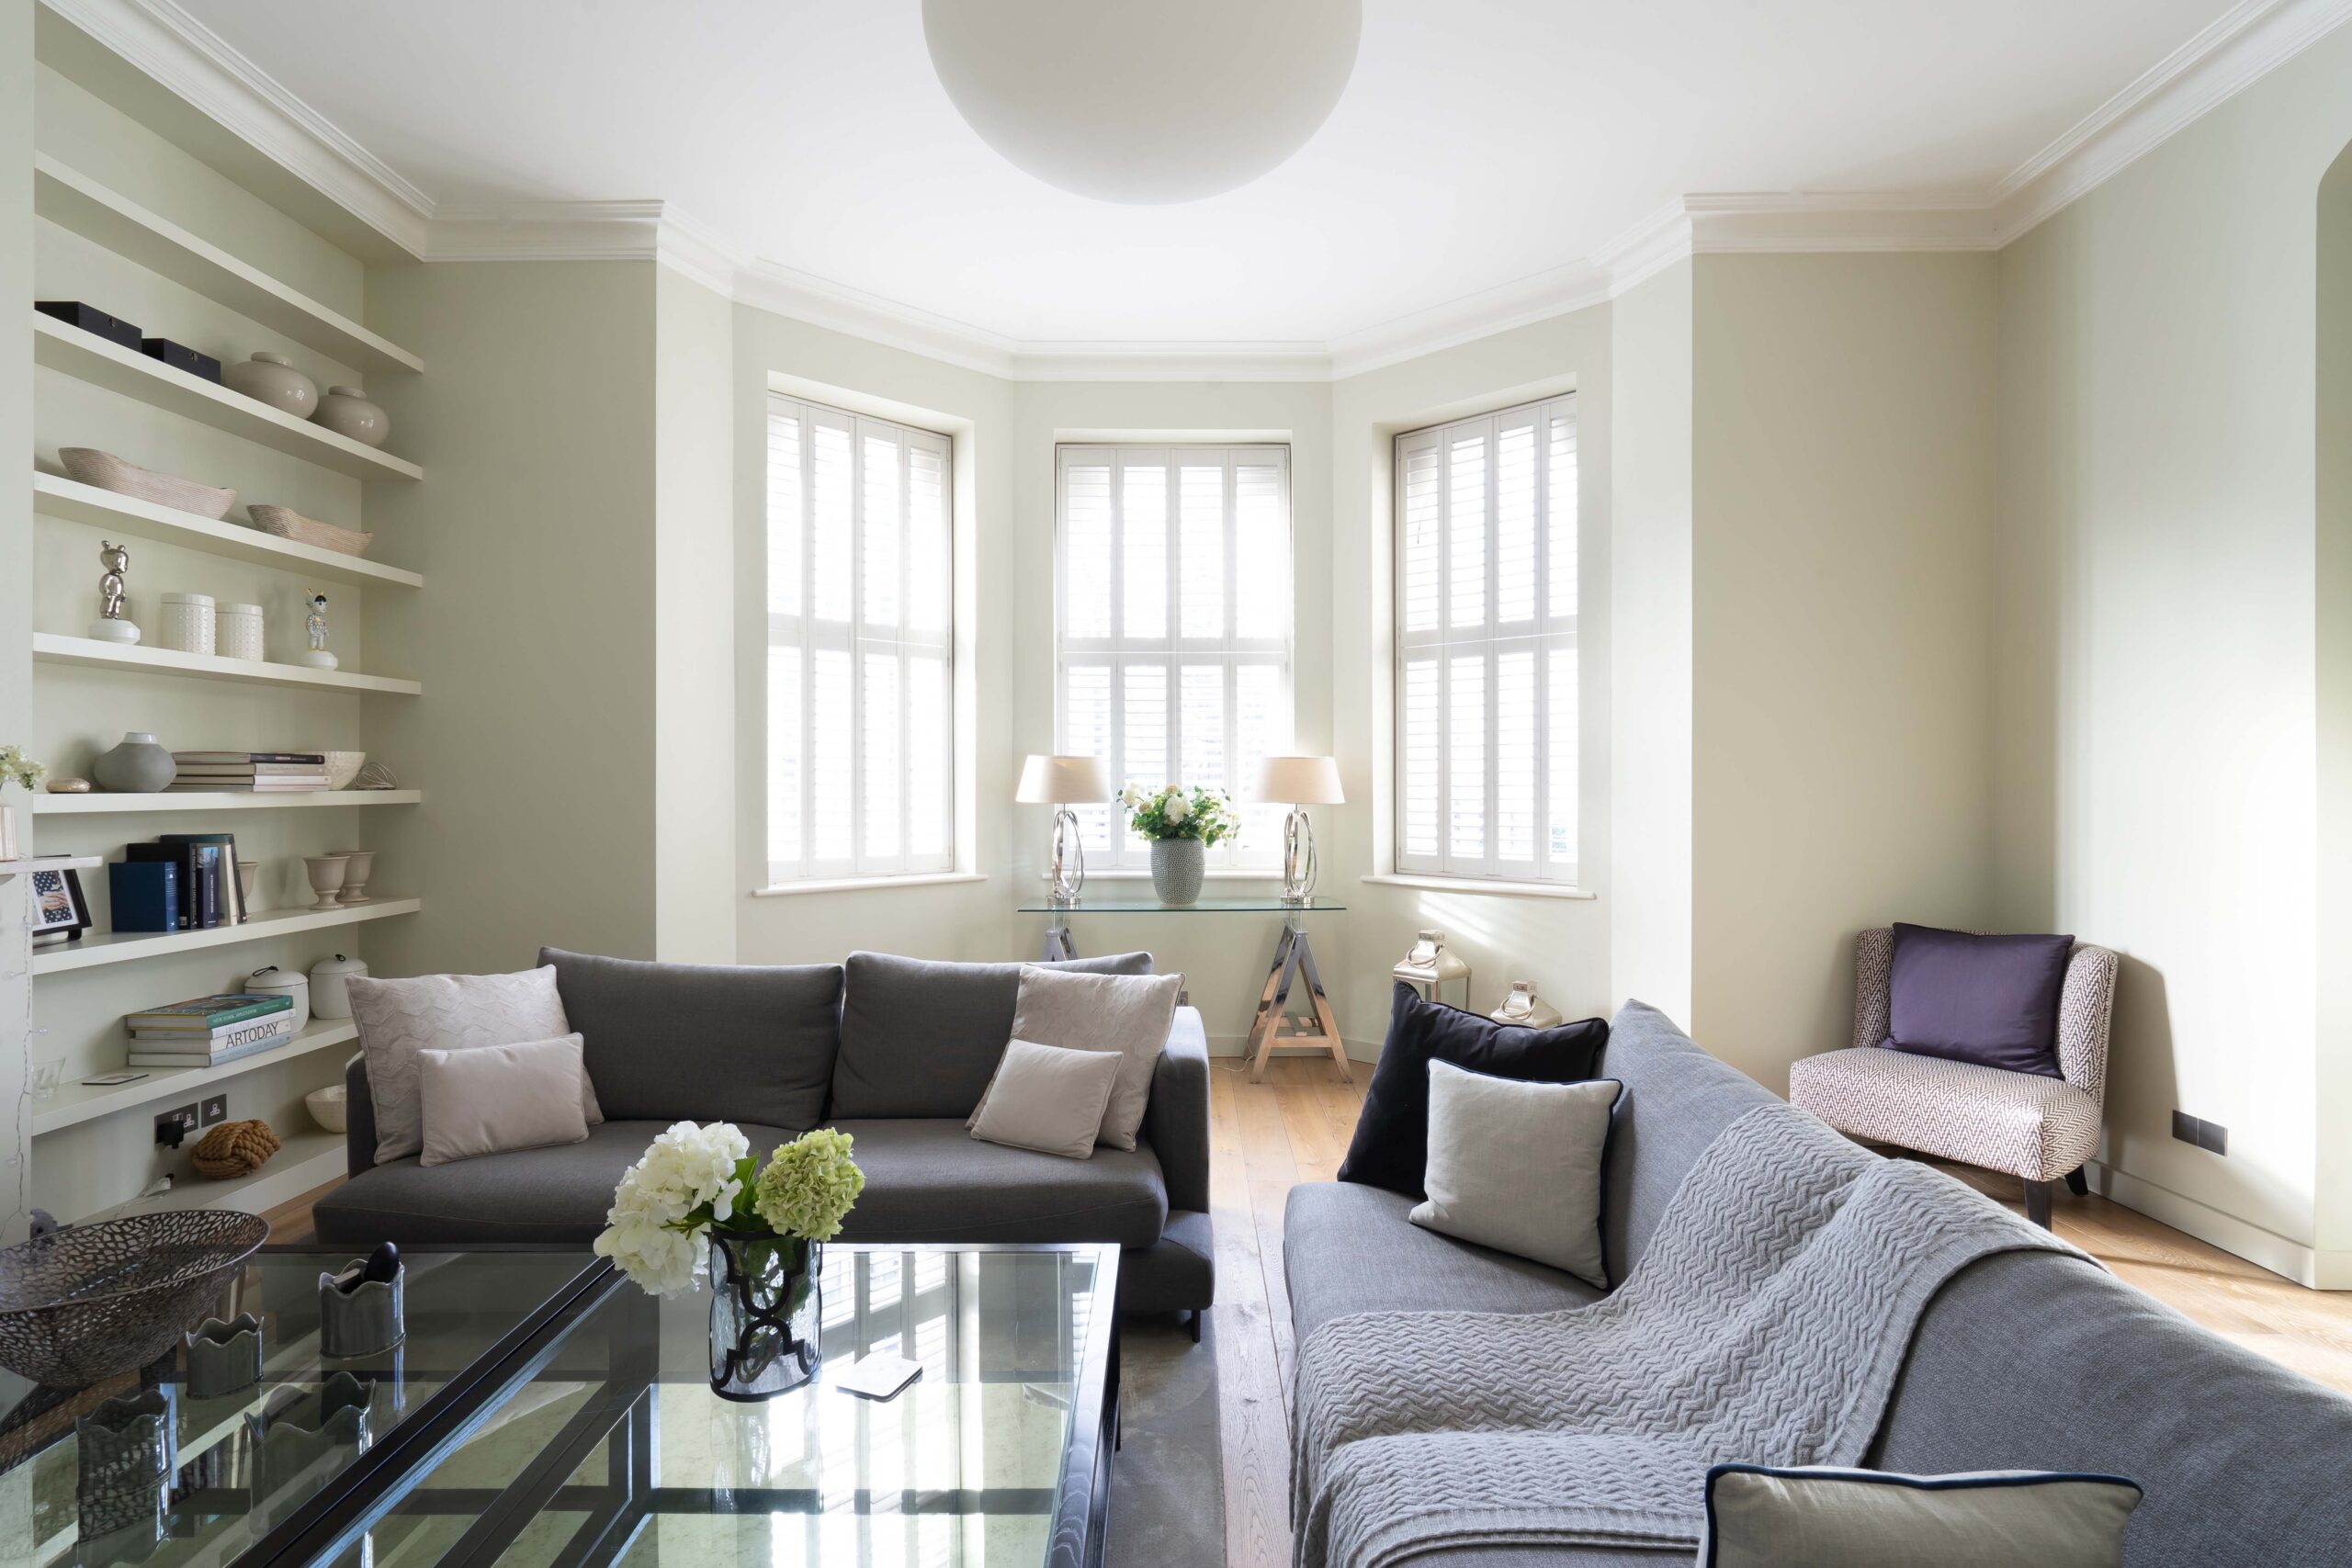 For Sale: Ladbroke Grove Notting Hill W11 luxury interior design in reception room